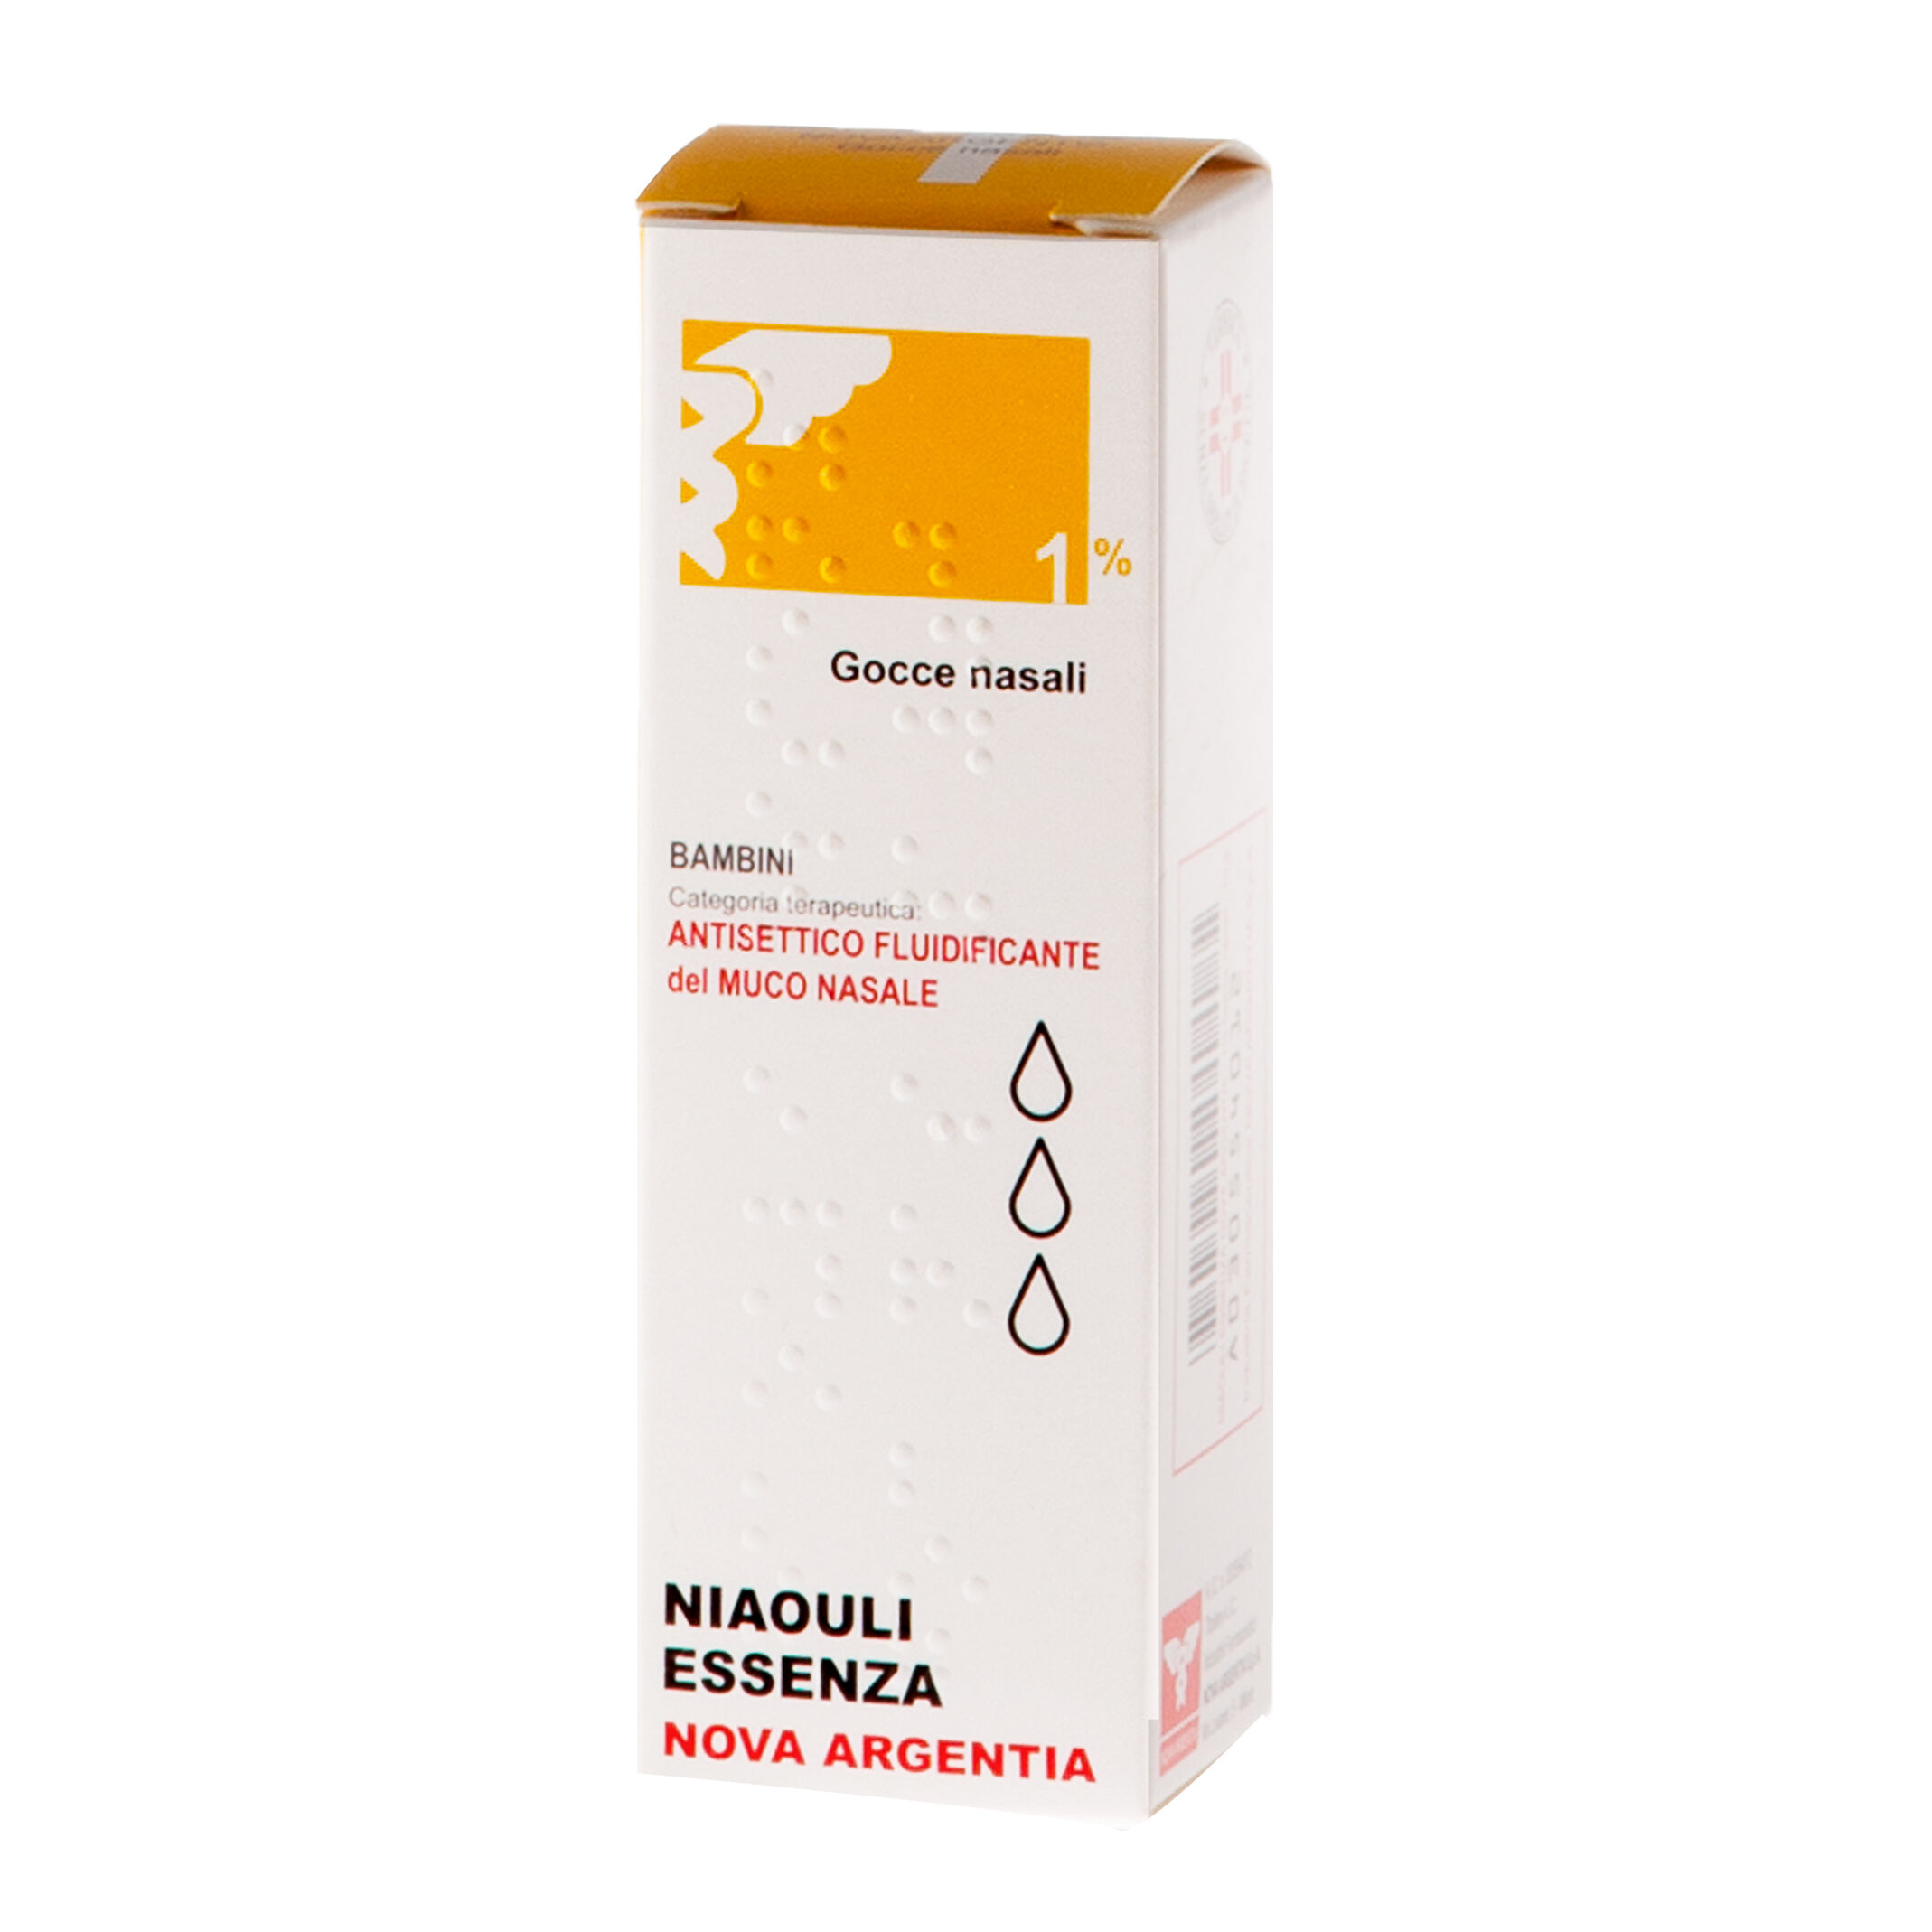 Nova Argentia Niaouli Essenza 1% Gocce Nasali 10g